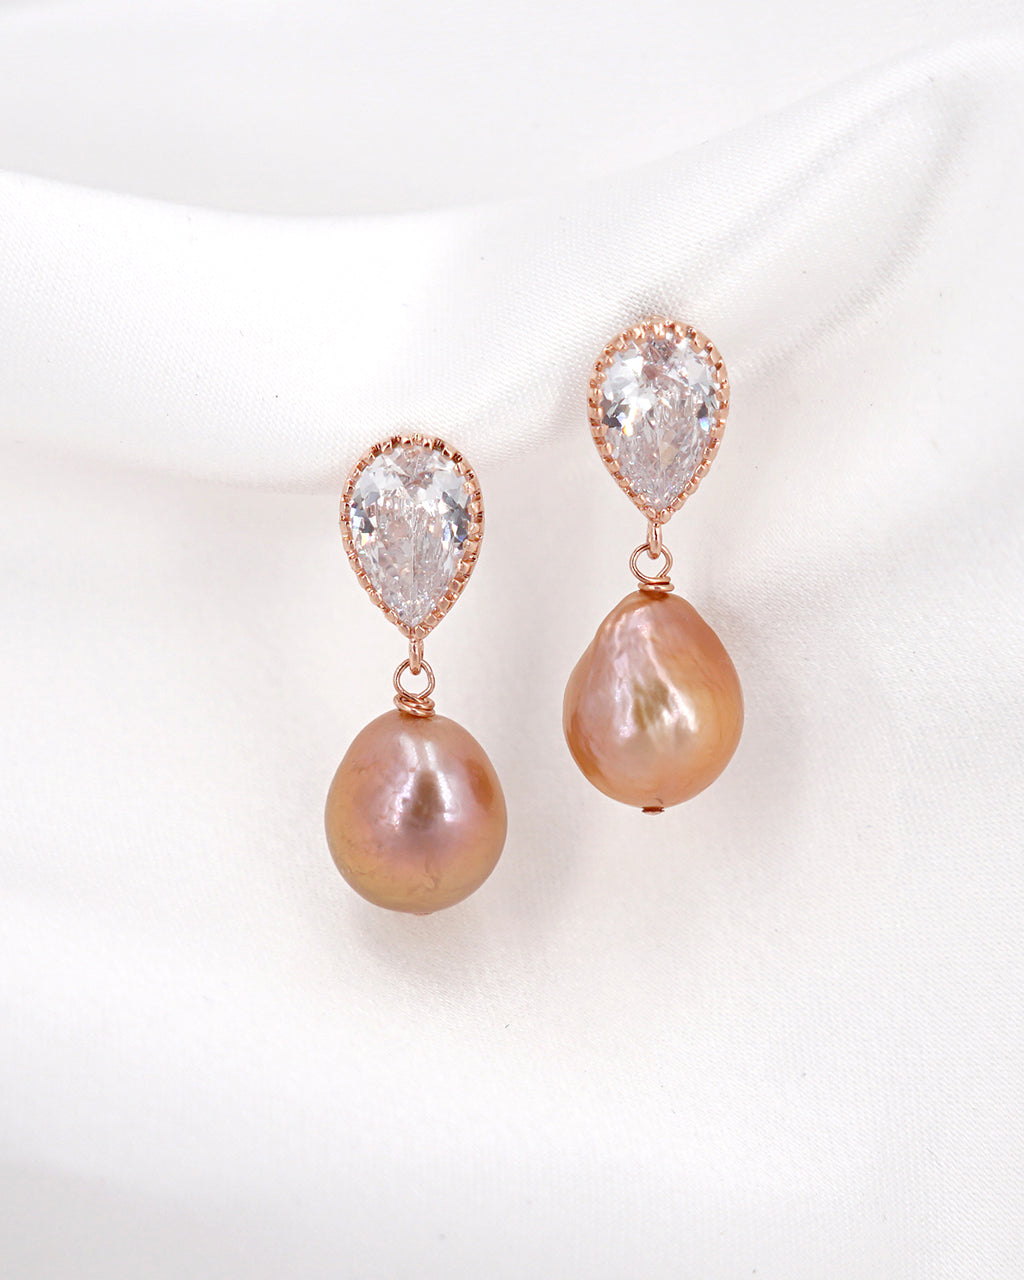 Luminous Edison Pearl Earrings - Teardrop - Wedding Bridal Jewelry for Brides and Bridesmaids | Singapore